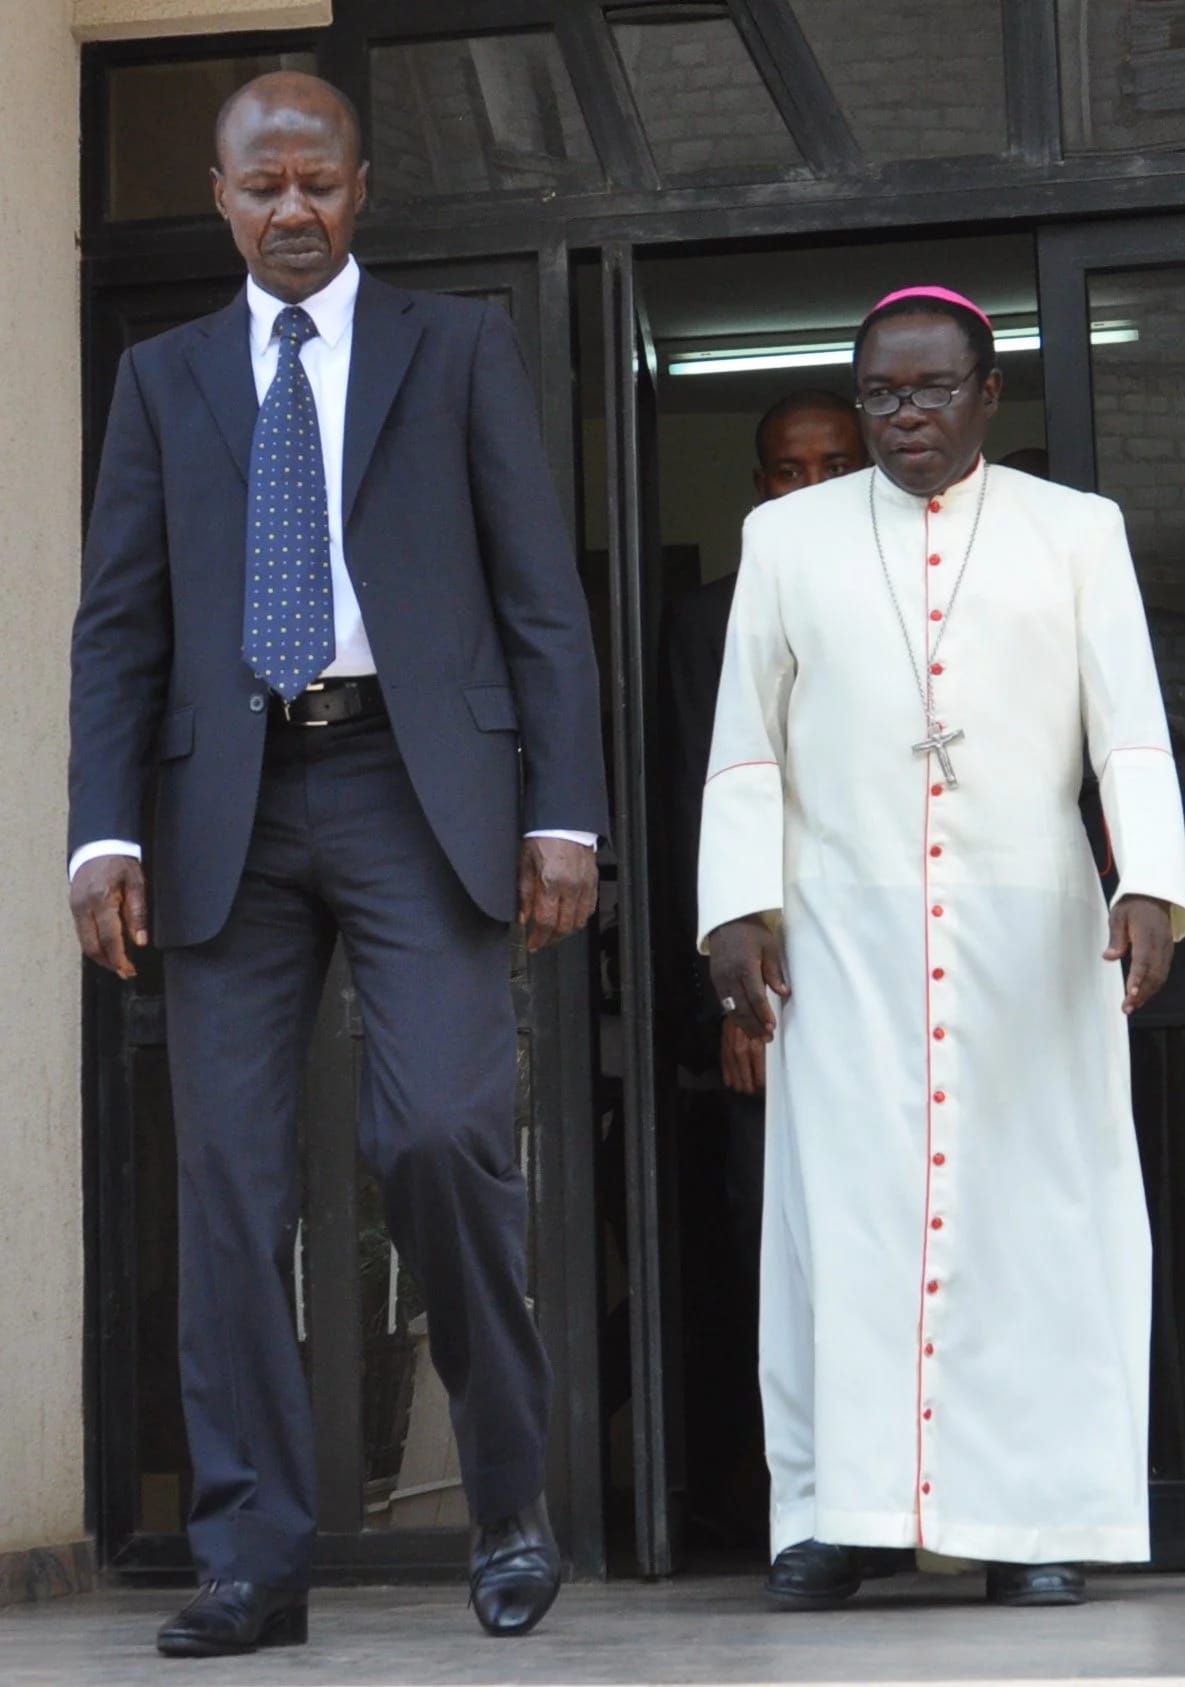 Bishop Matthew Hassan Kukah visited Femi Fani-Kayode, Reuben Abati, Obanikoro in EFCC custody